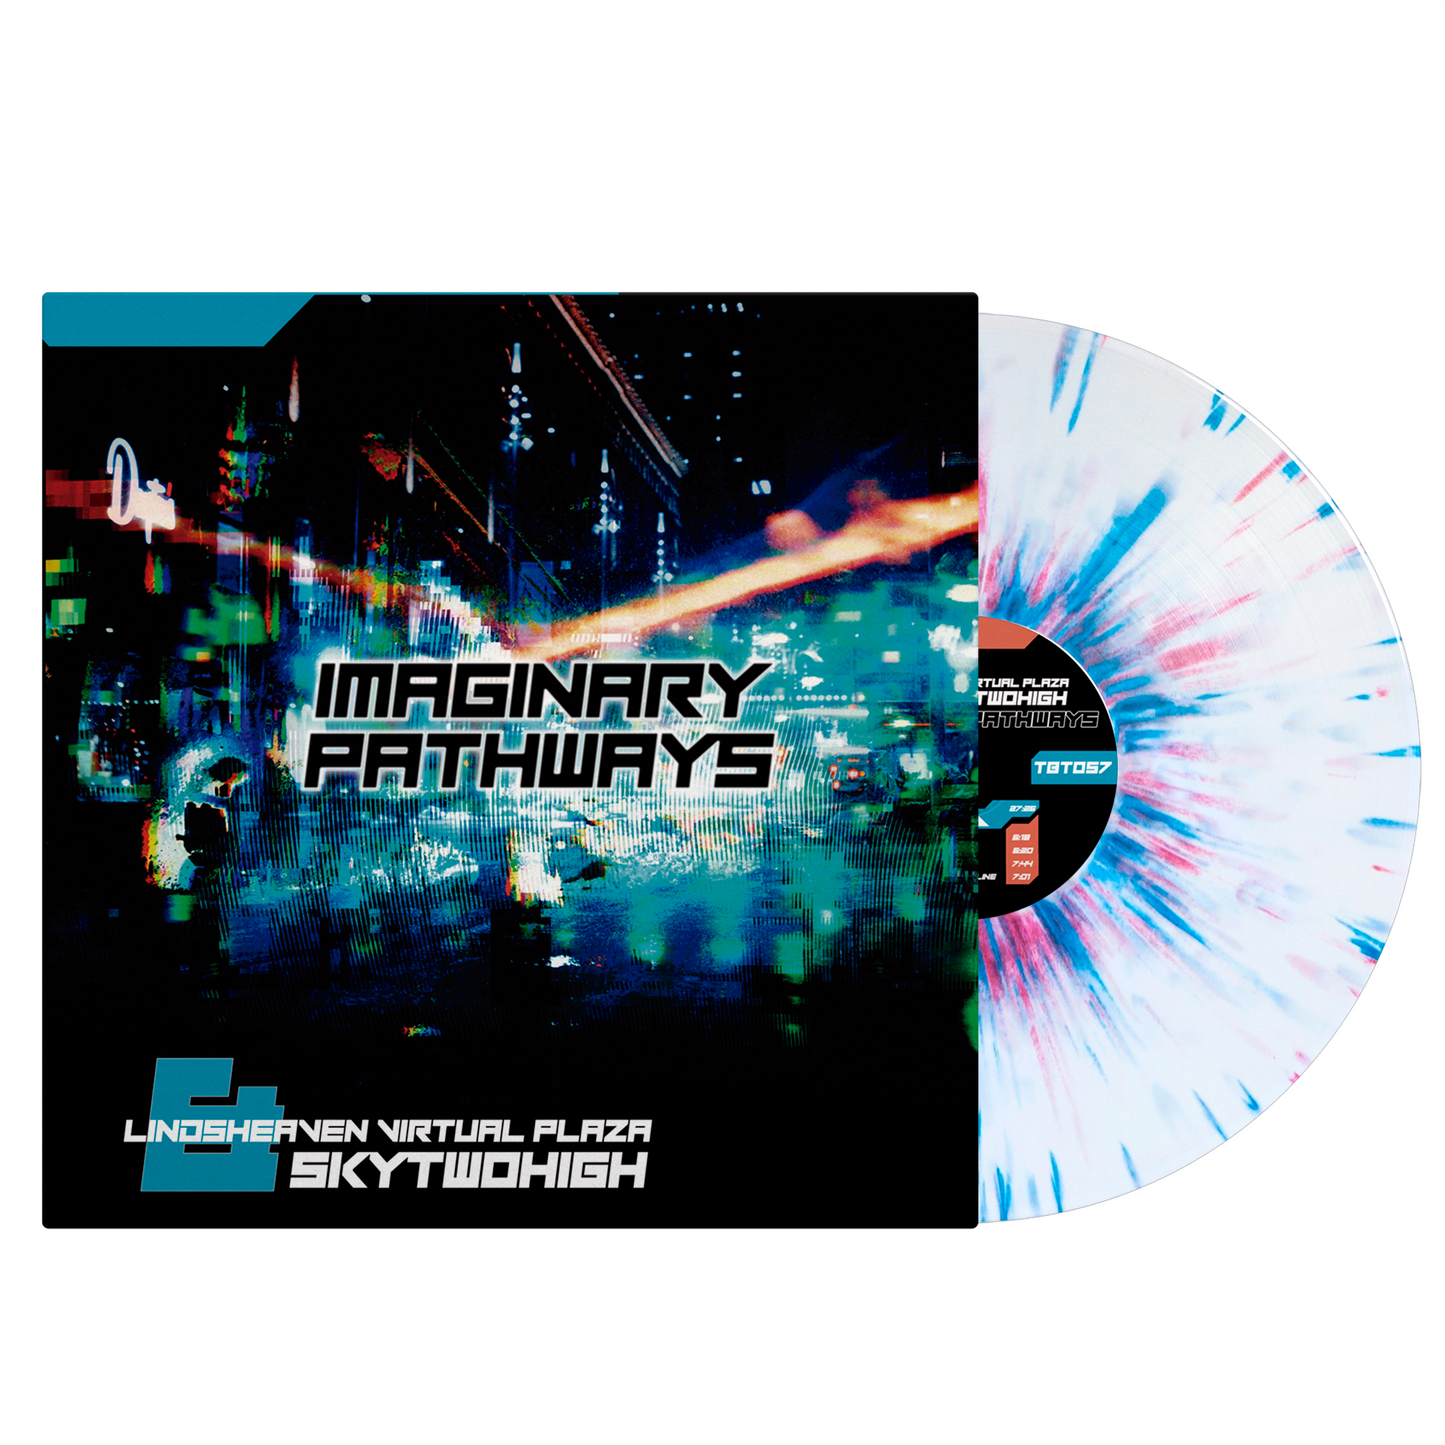 Lindsheaven Virtual Plaza & SkyTwoHigh - "Imaginary Pathways" Limited Edition 12" Vinyl LP